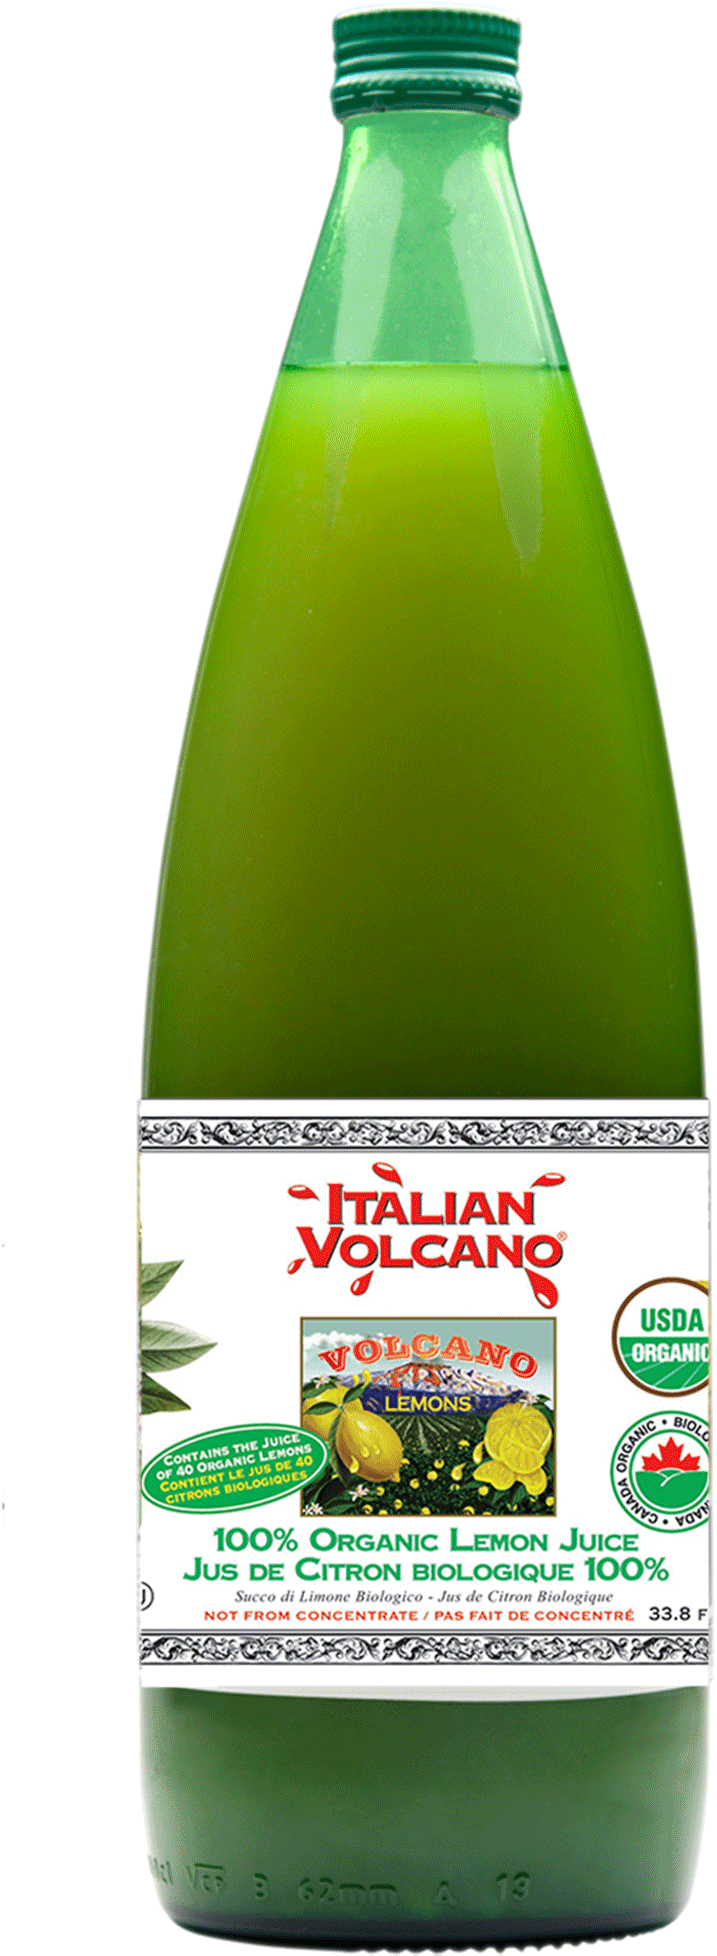 Organic Volcano Lemon Juice, 1l - Volcano Lemon Juice - 1 L Bottle (1600x2000), Png Download